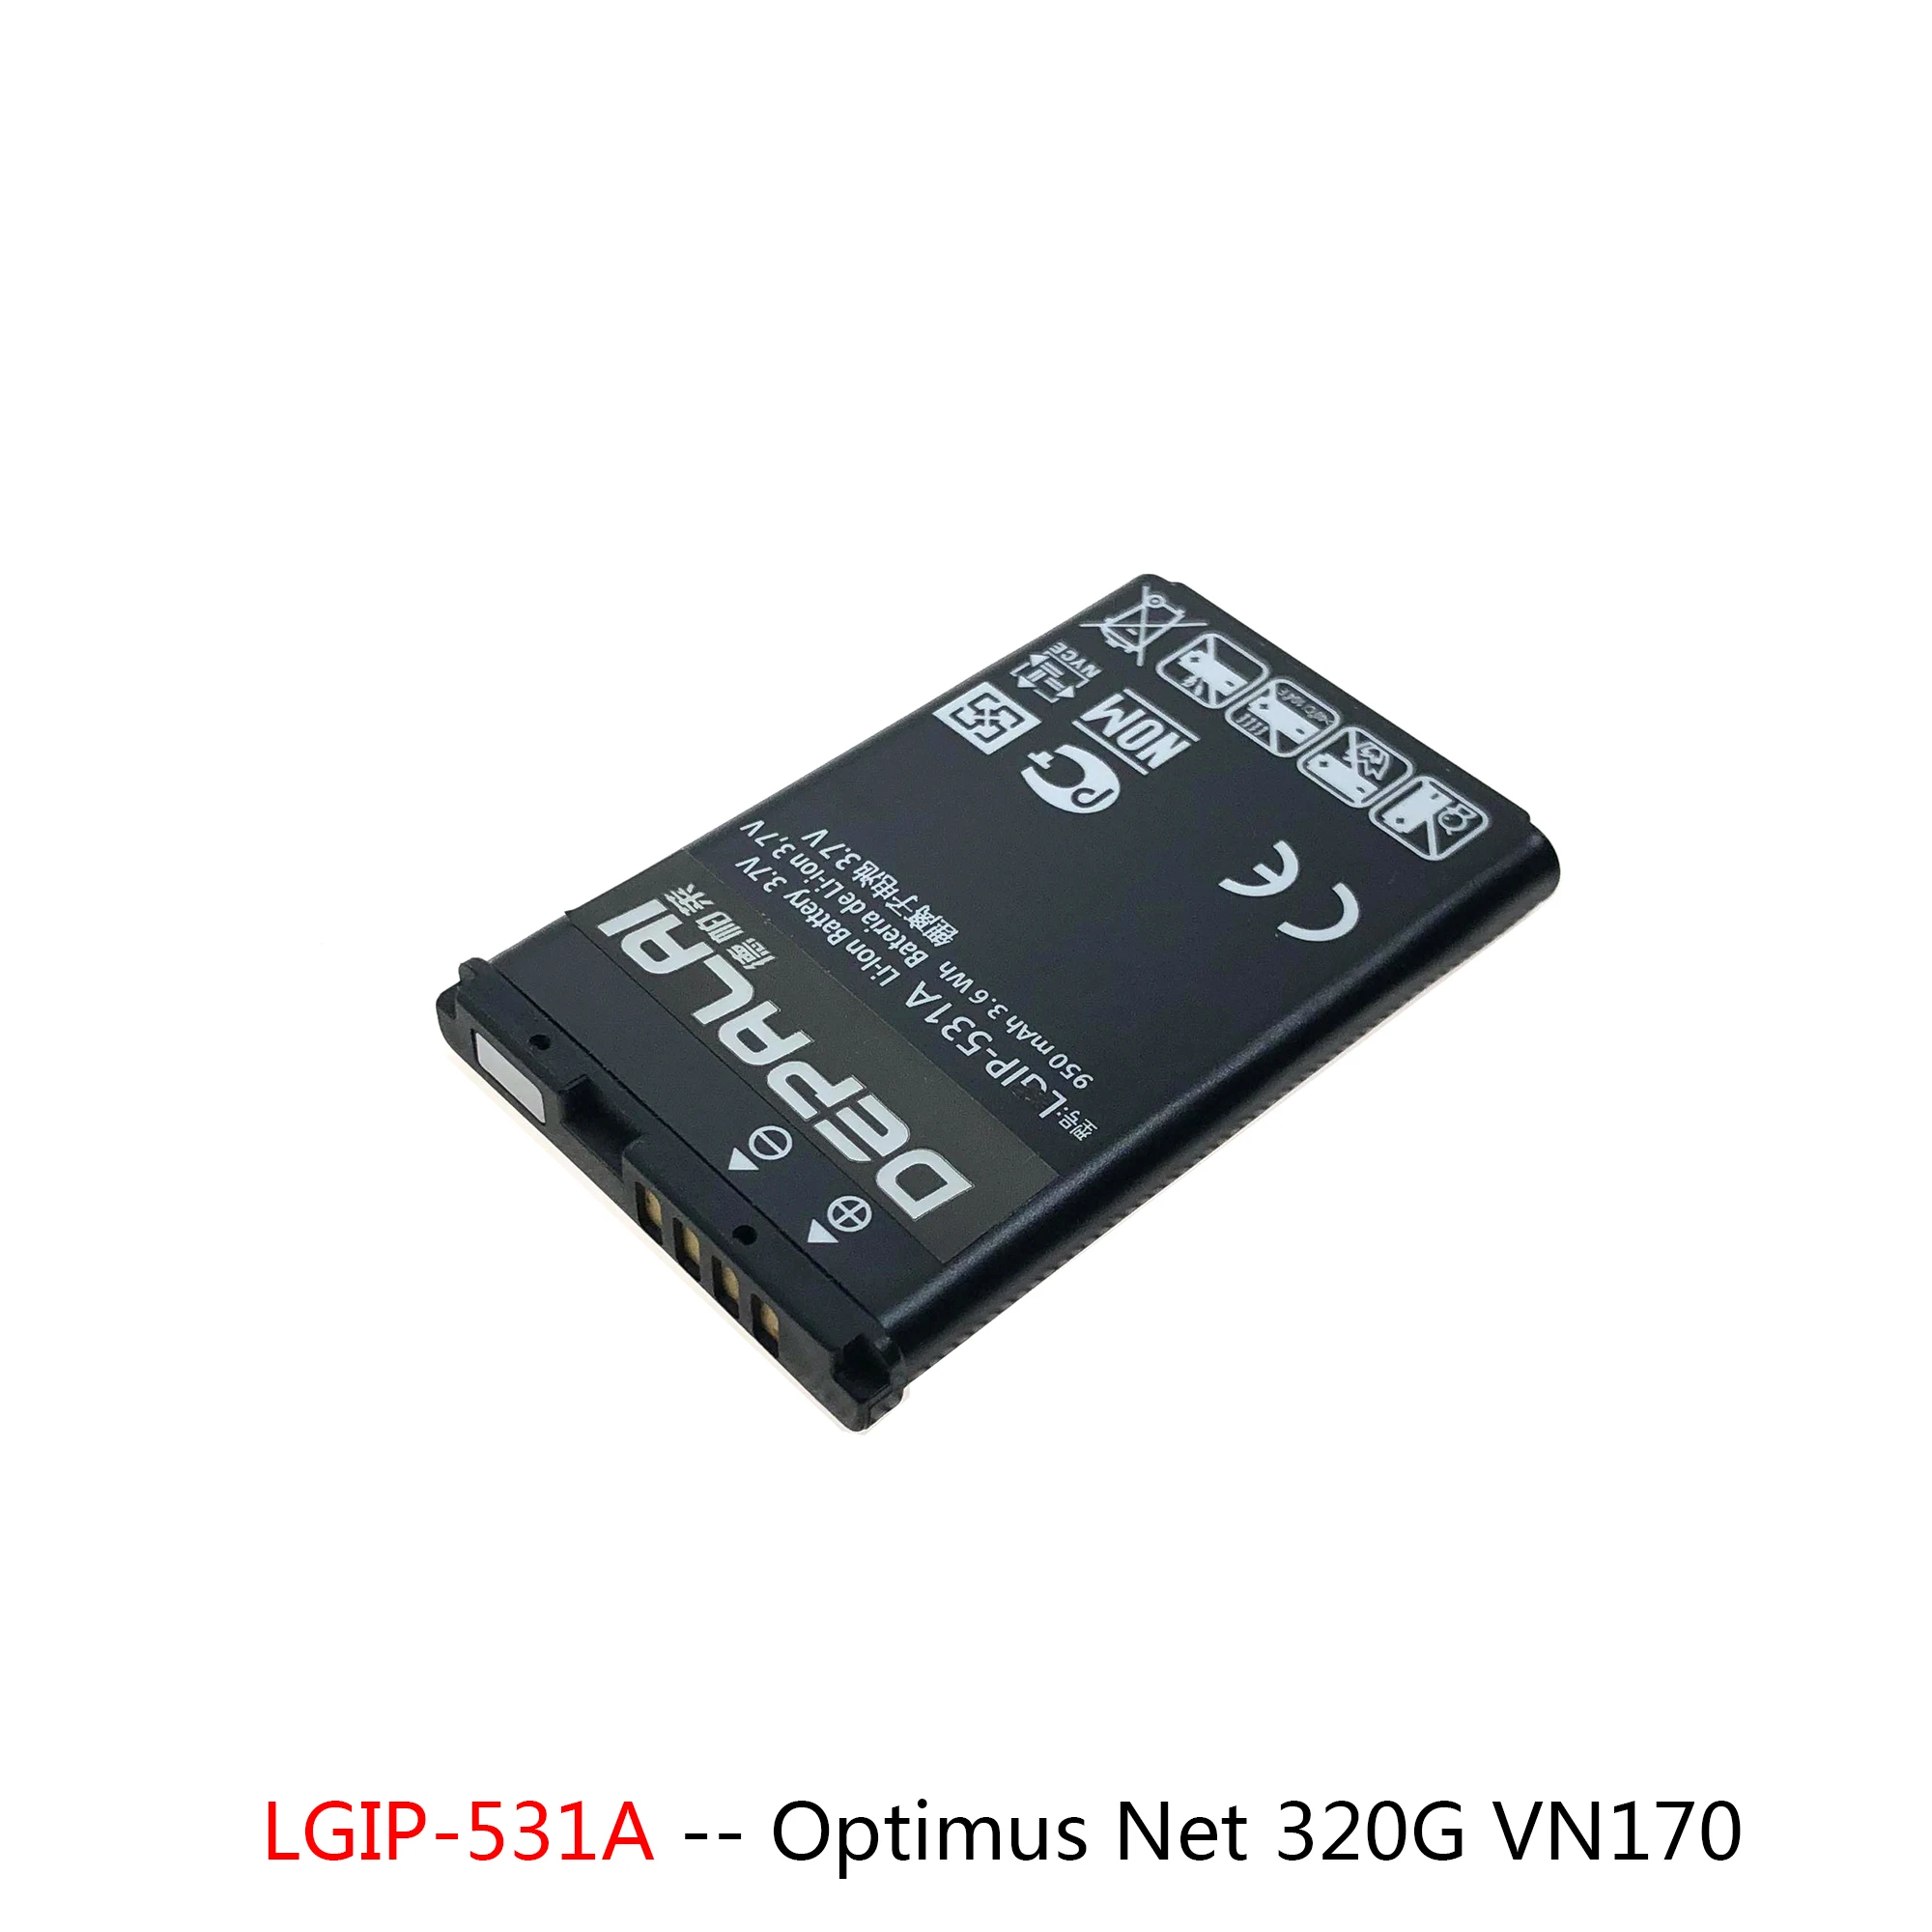 LGIP-550N LGIP-400N LGIP-531A Аккумулятор Для LG Optimus VM670 690 P500 320G VN170 GB100 Аккумуляторы для телефонов 101 KV700 S310 GD510 Изображение 3